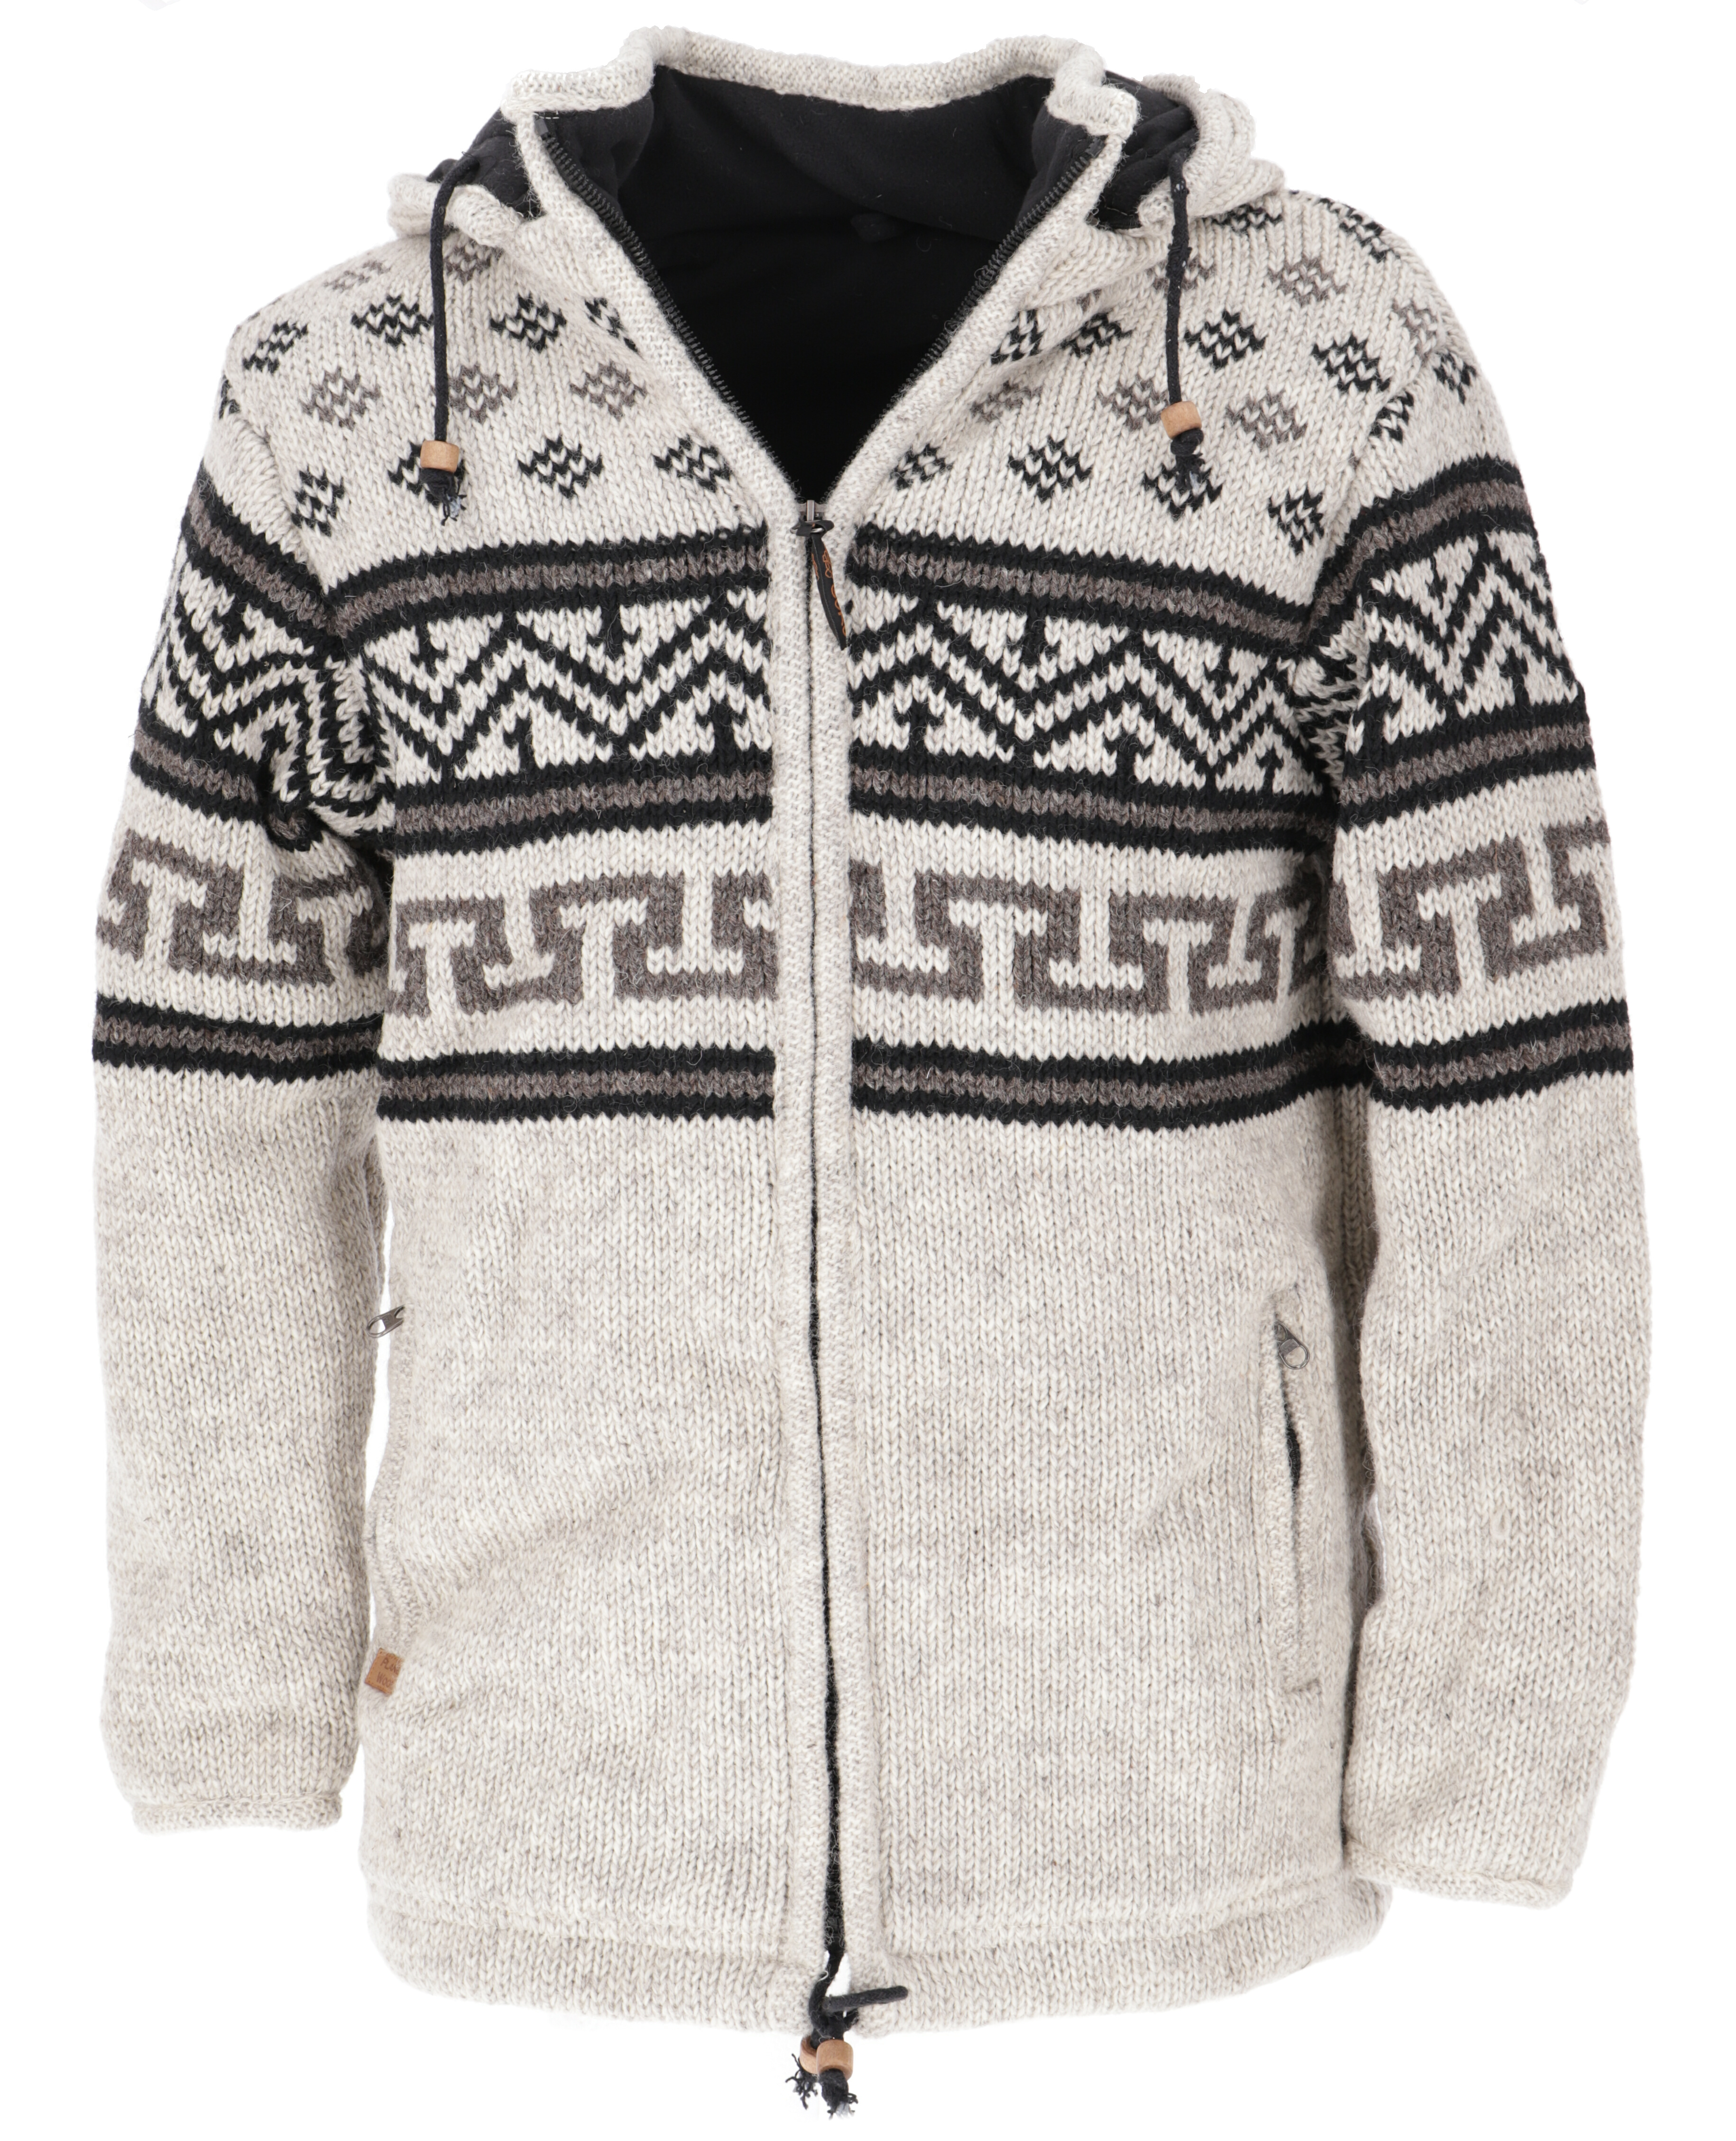 Kassér tendens Tilstand Nordic pattern wool jacket, cardigan light gray/black - model 5